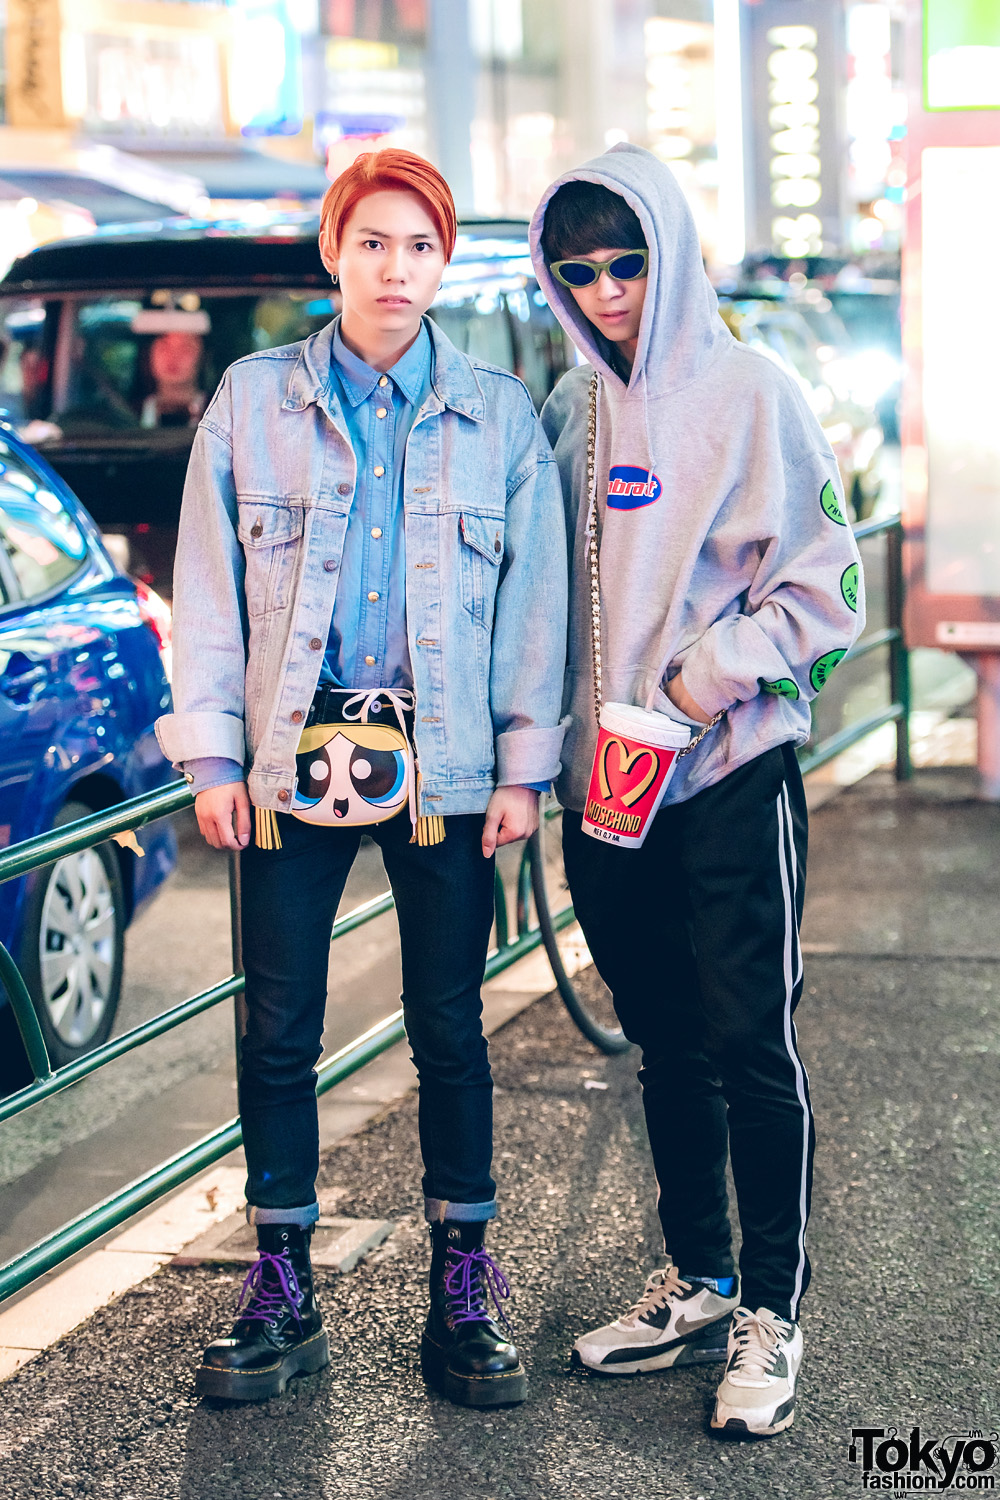 Harajuku Guys in Casual Streetwear & Cheeky Moschino Bags